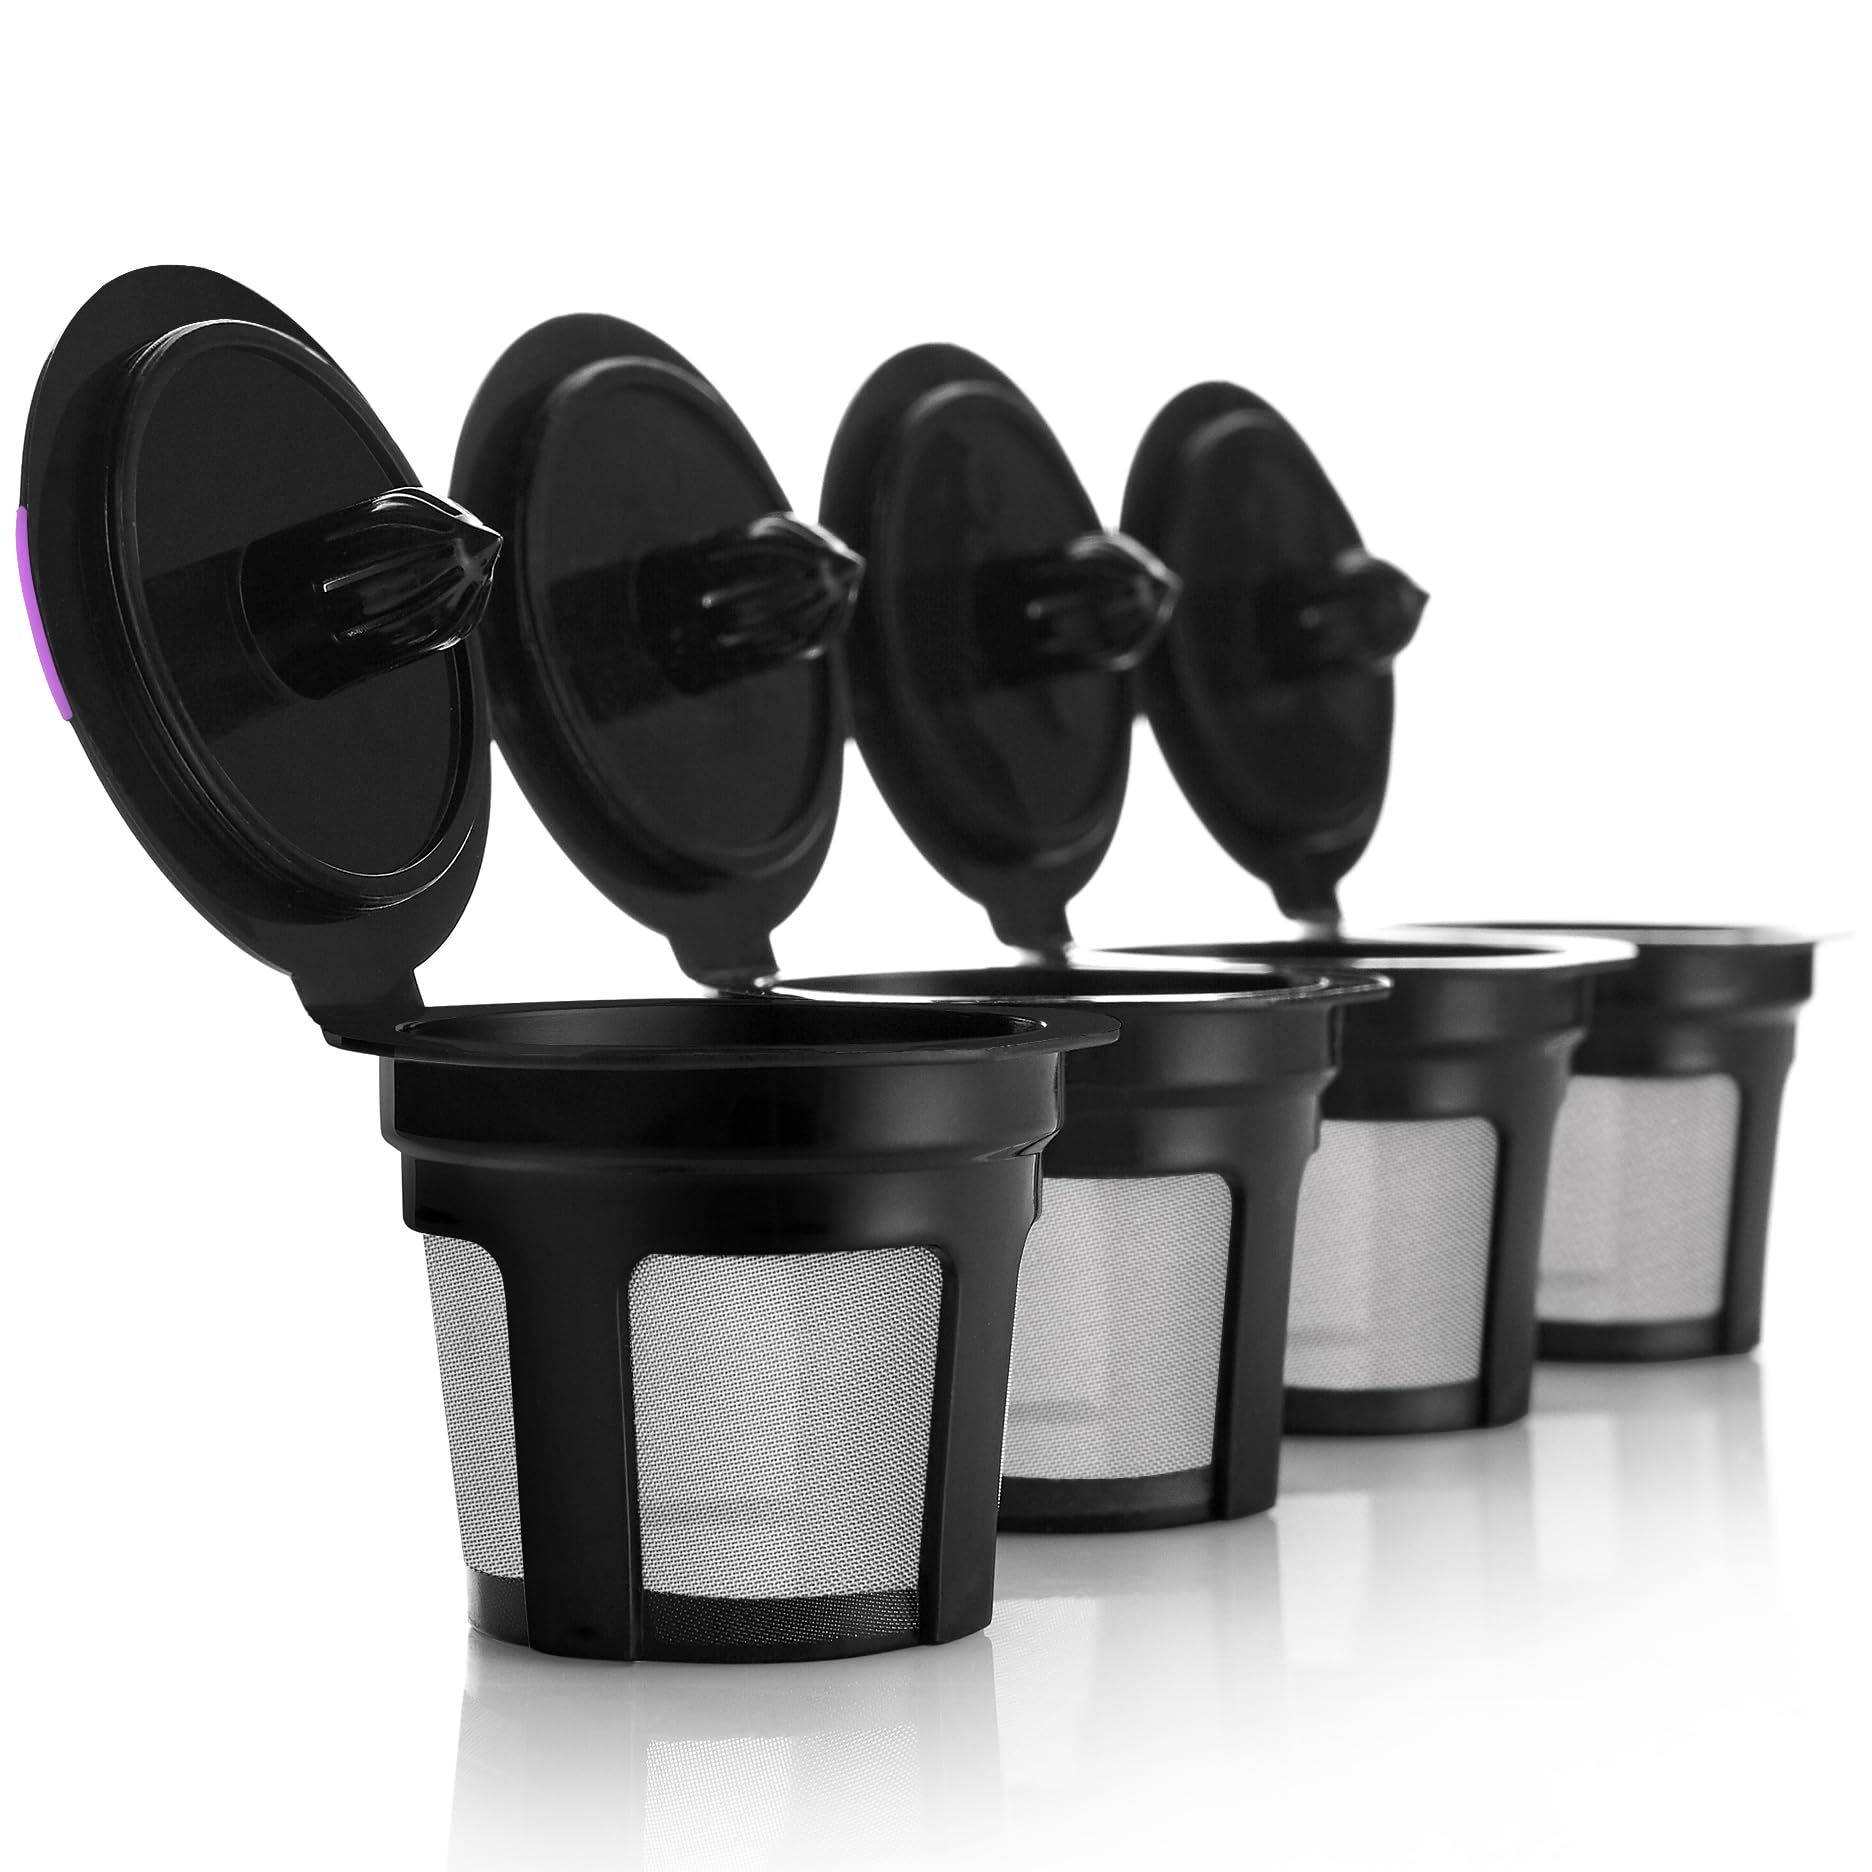 GoodCups 4 Reusable K Cups for Keurig K-Classic, K-Elite, K-Select, K-Cafe, K-Compact, K200, K300, K400, K500, Universal Fit Black Refill